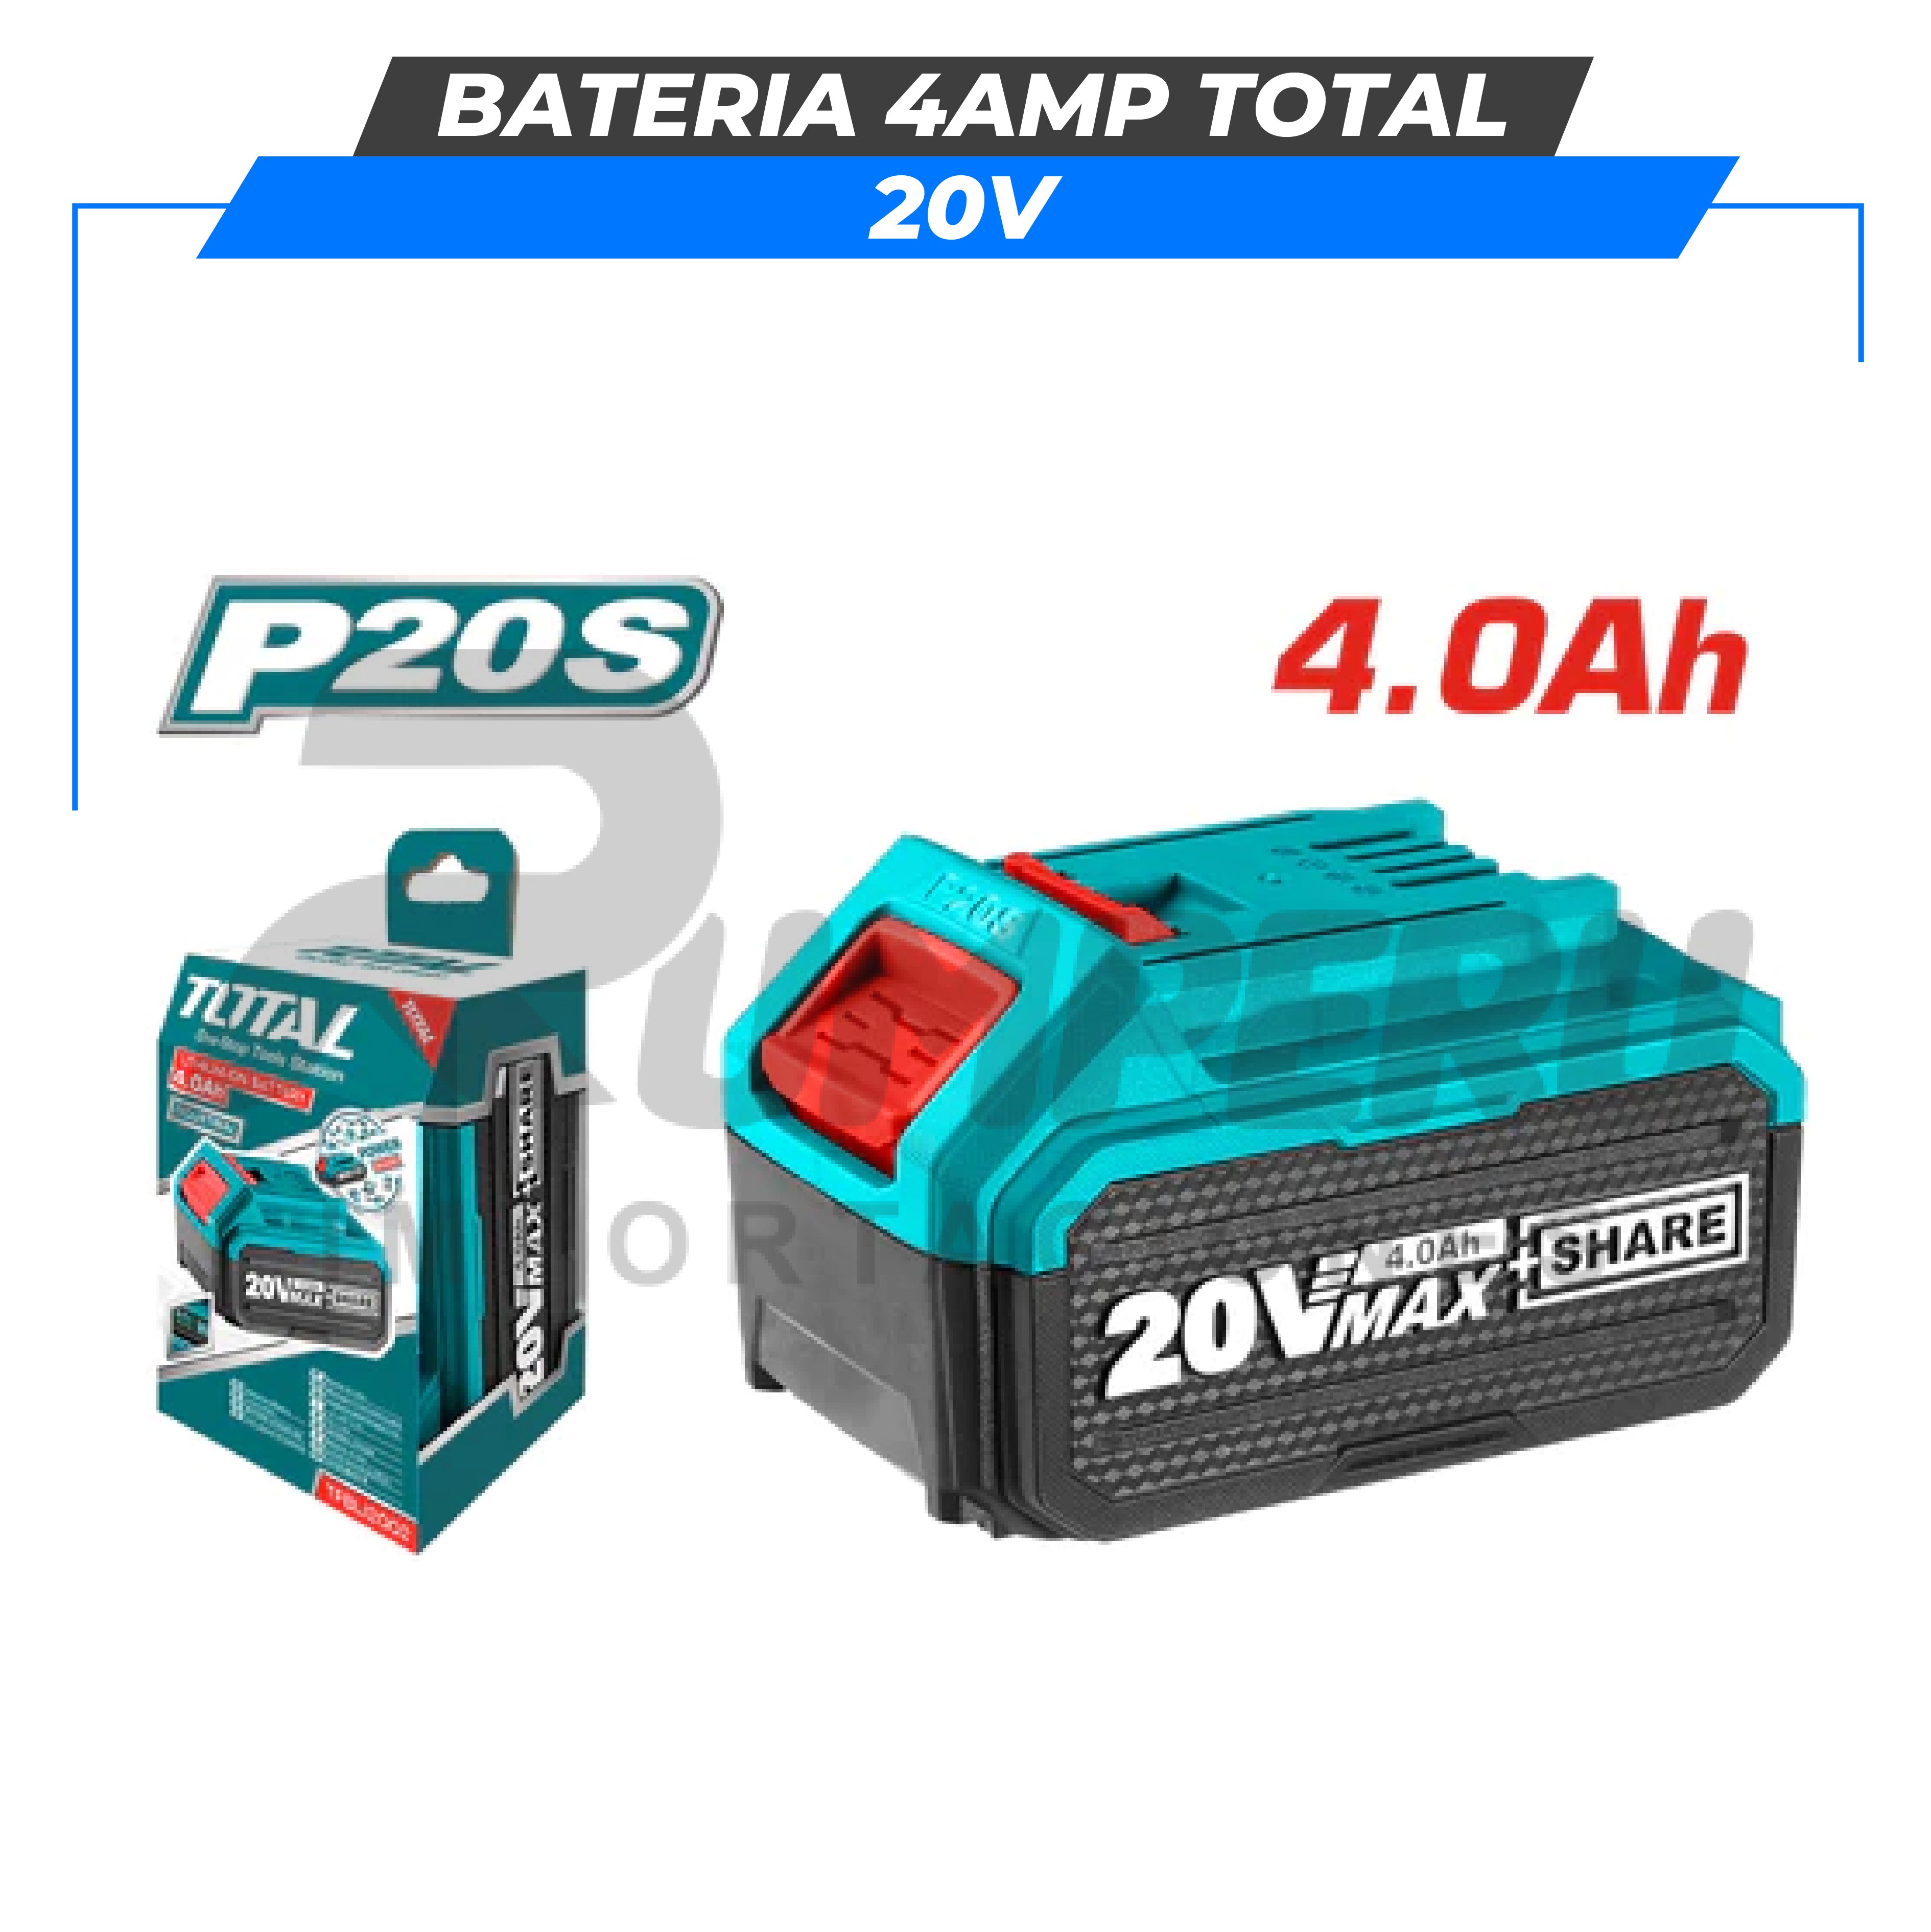 Bateria 20v 4 amp TOTAL